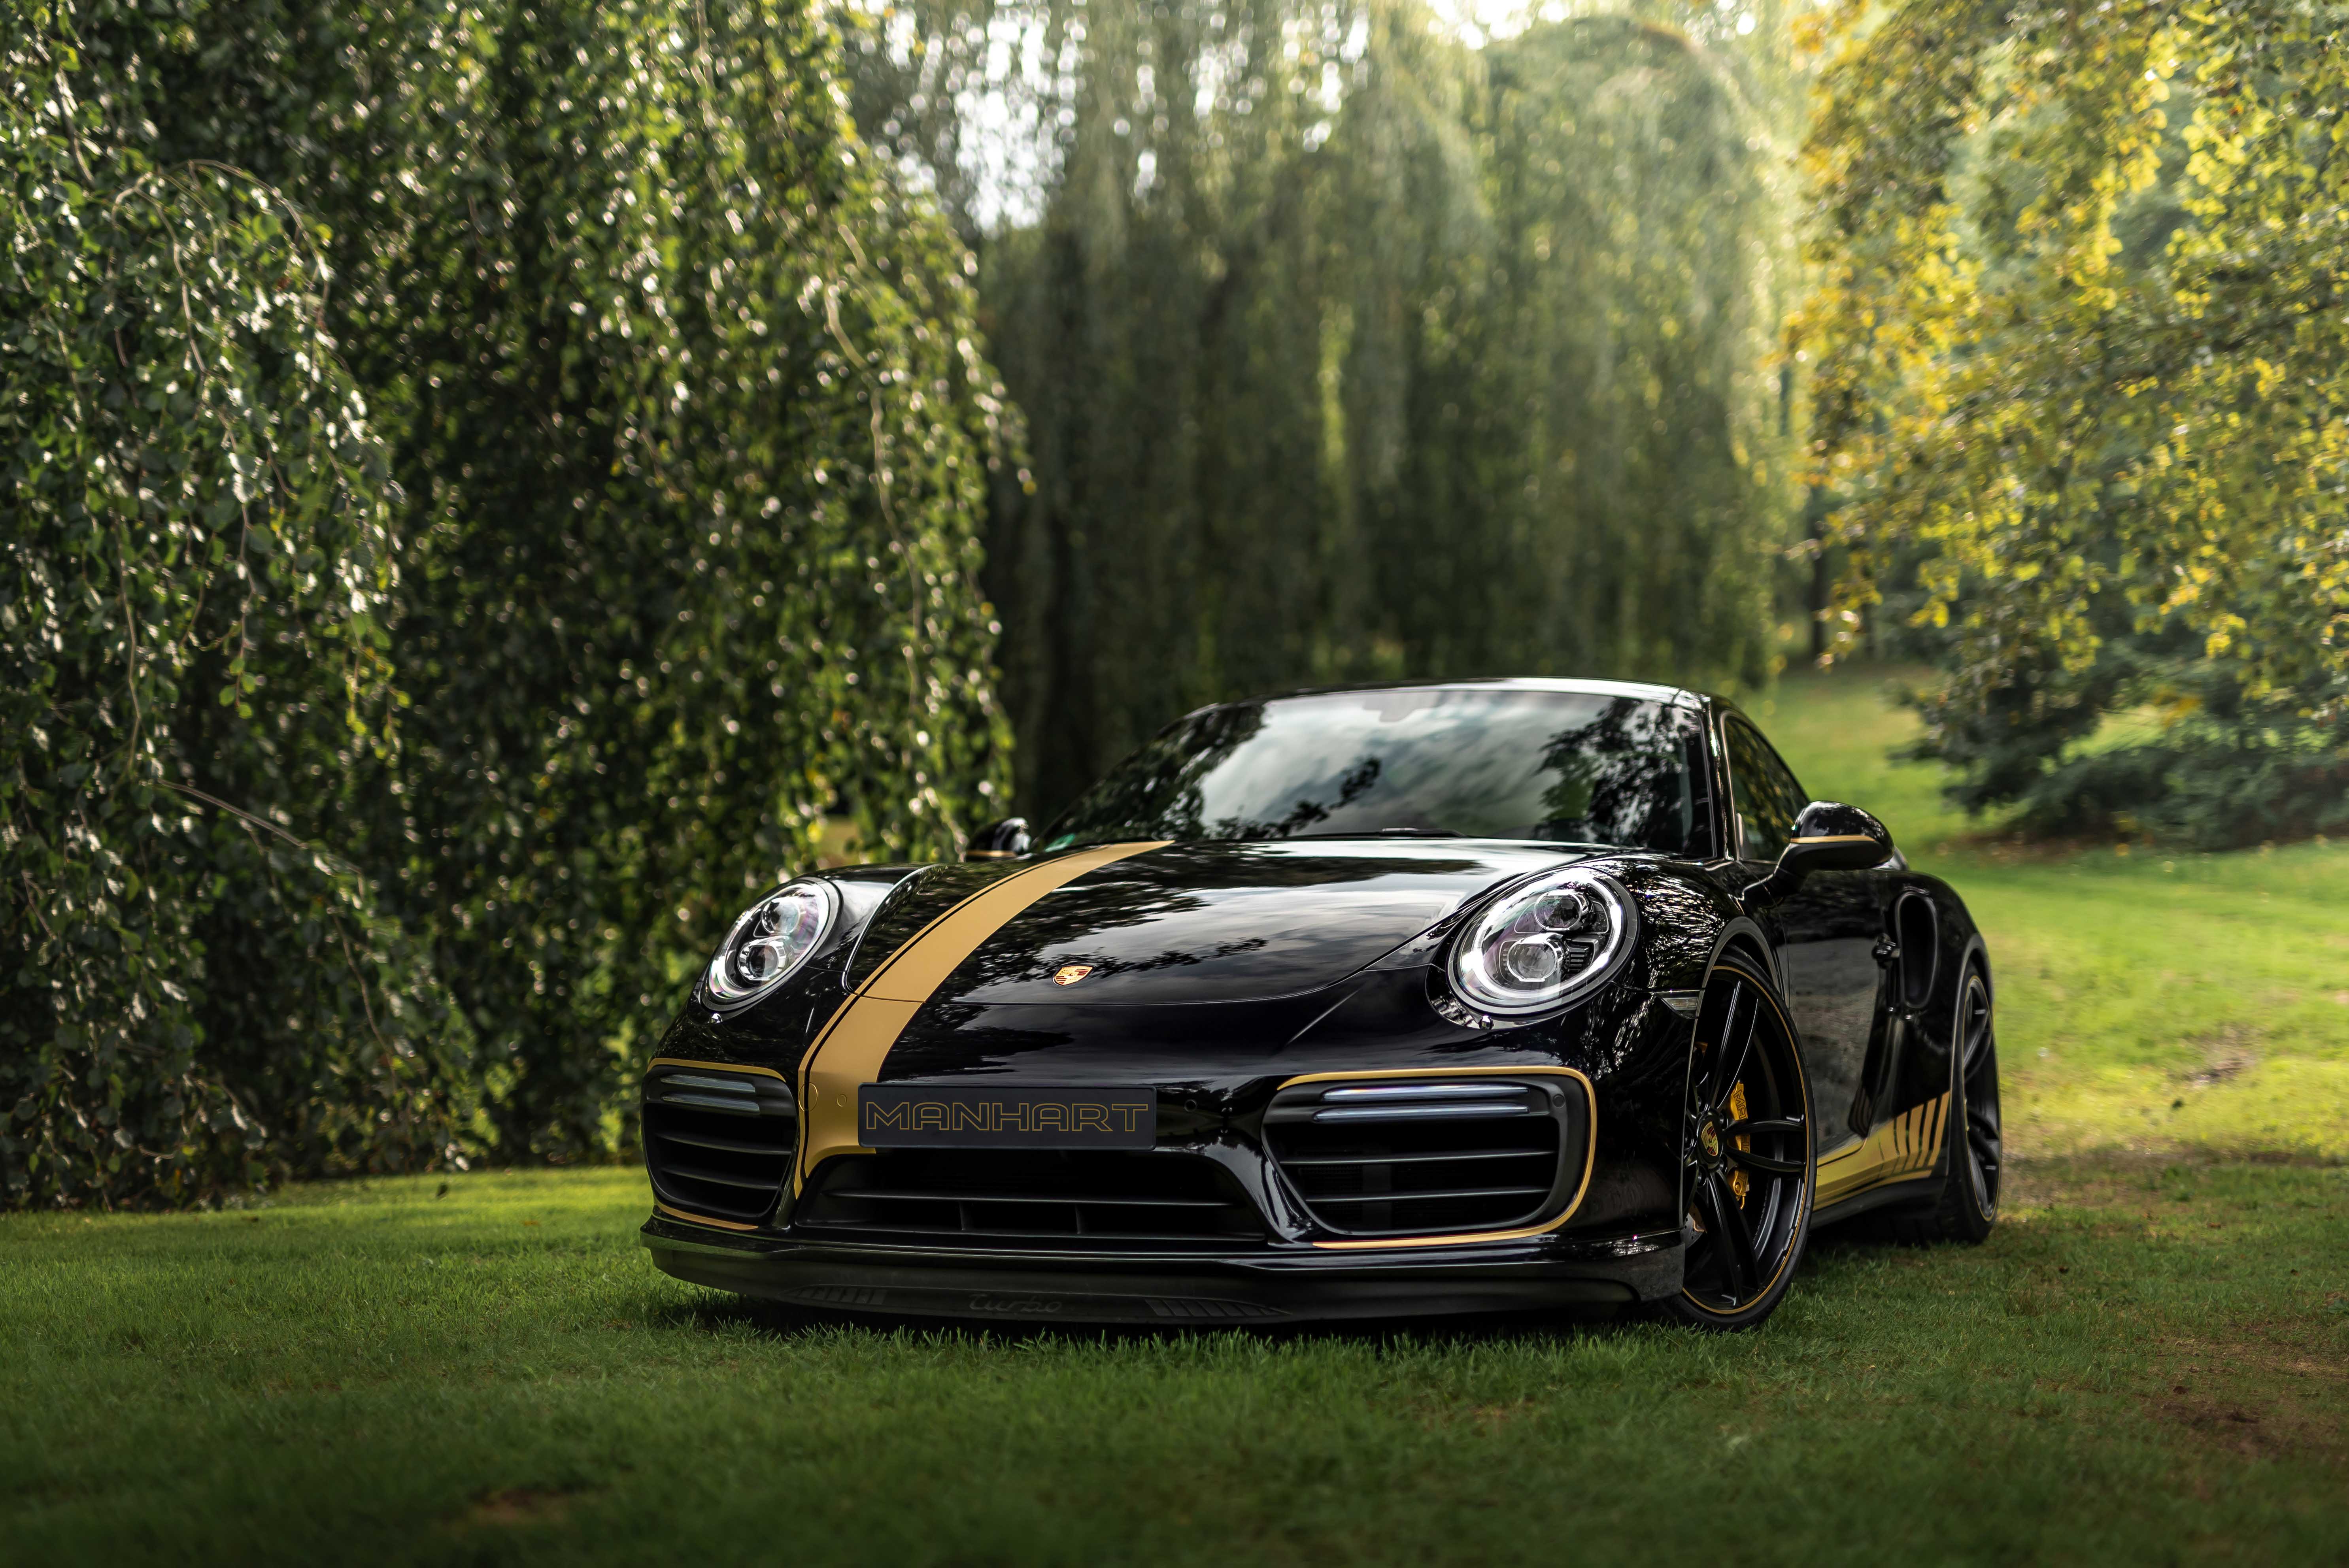 Black Porsche 918 on the lawn